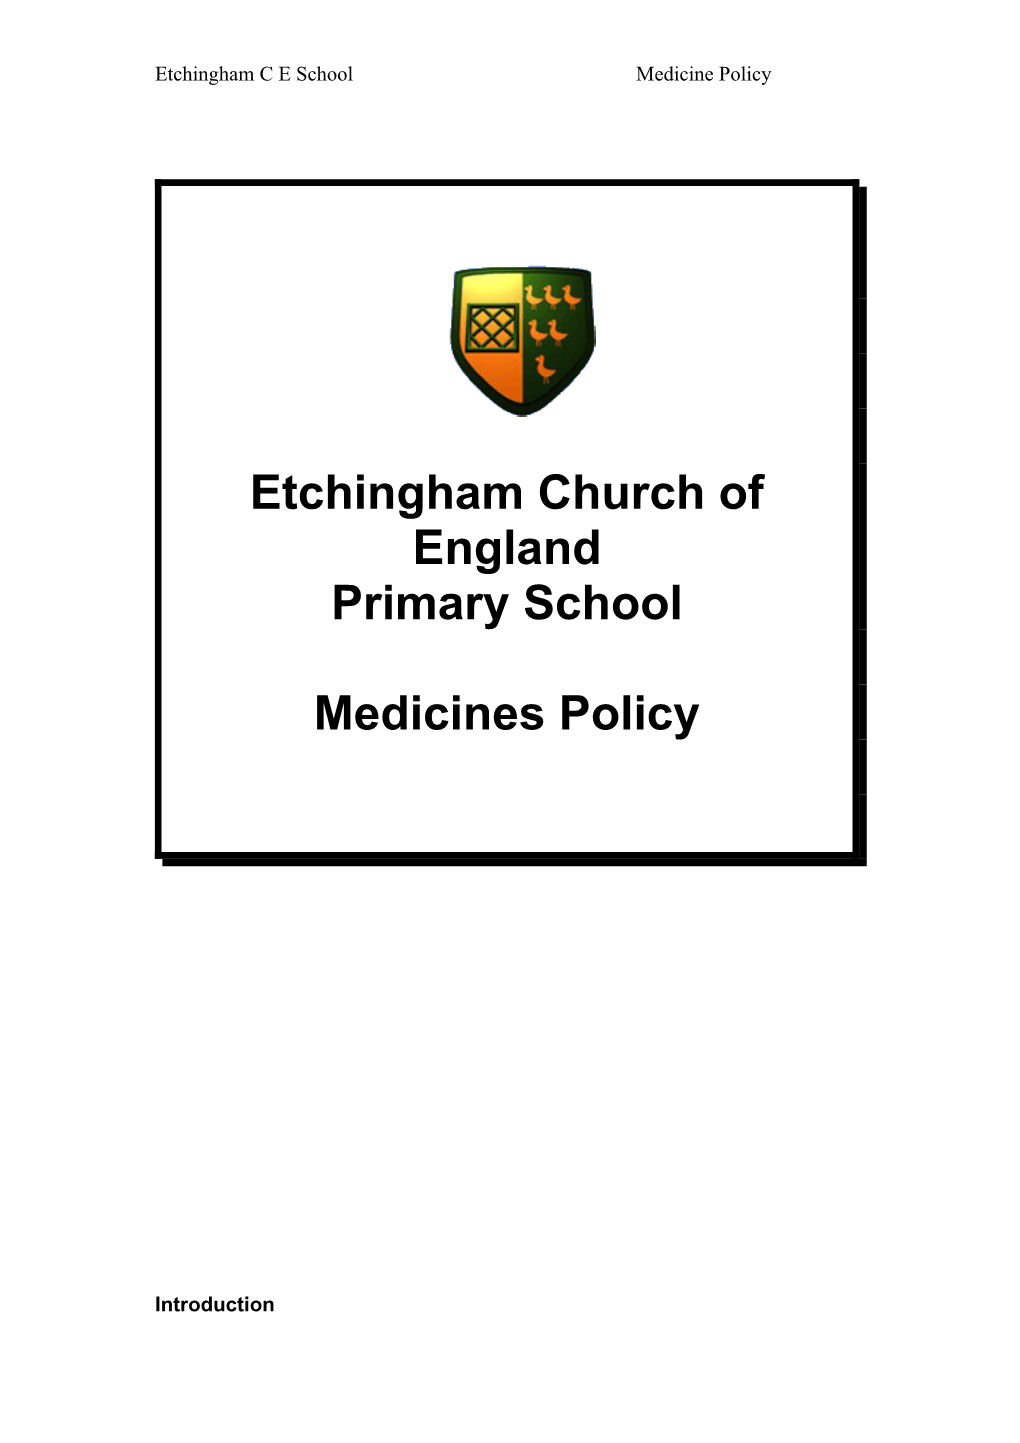 Etchingham Church of England